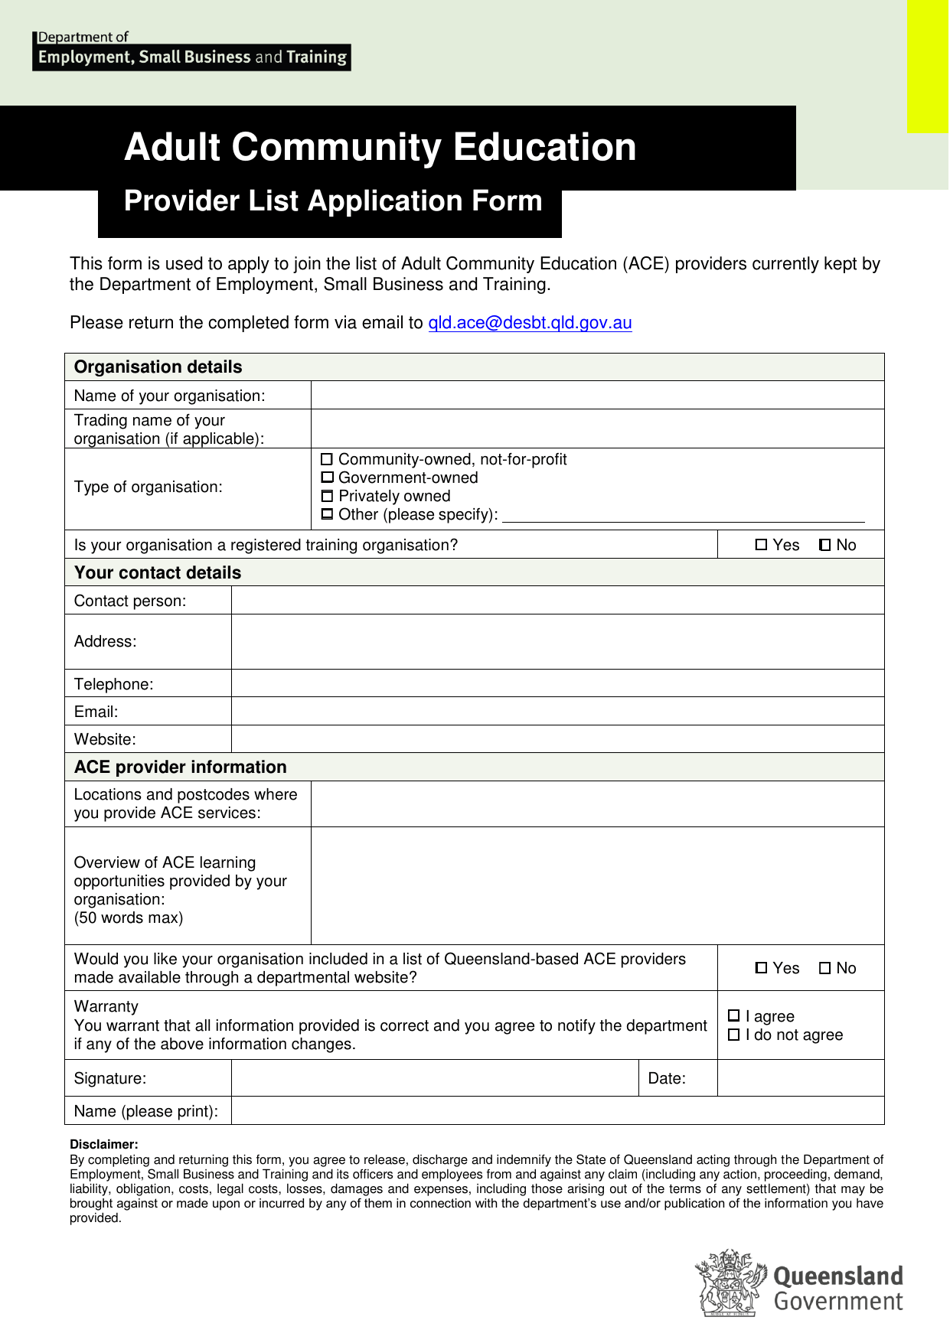 Adult Community Education Provider List Application Form - Queensland, Australia, Page 1